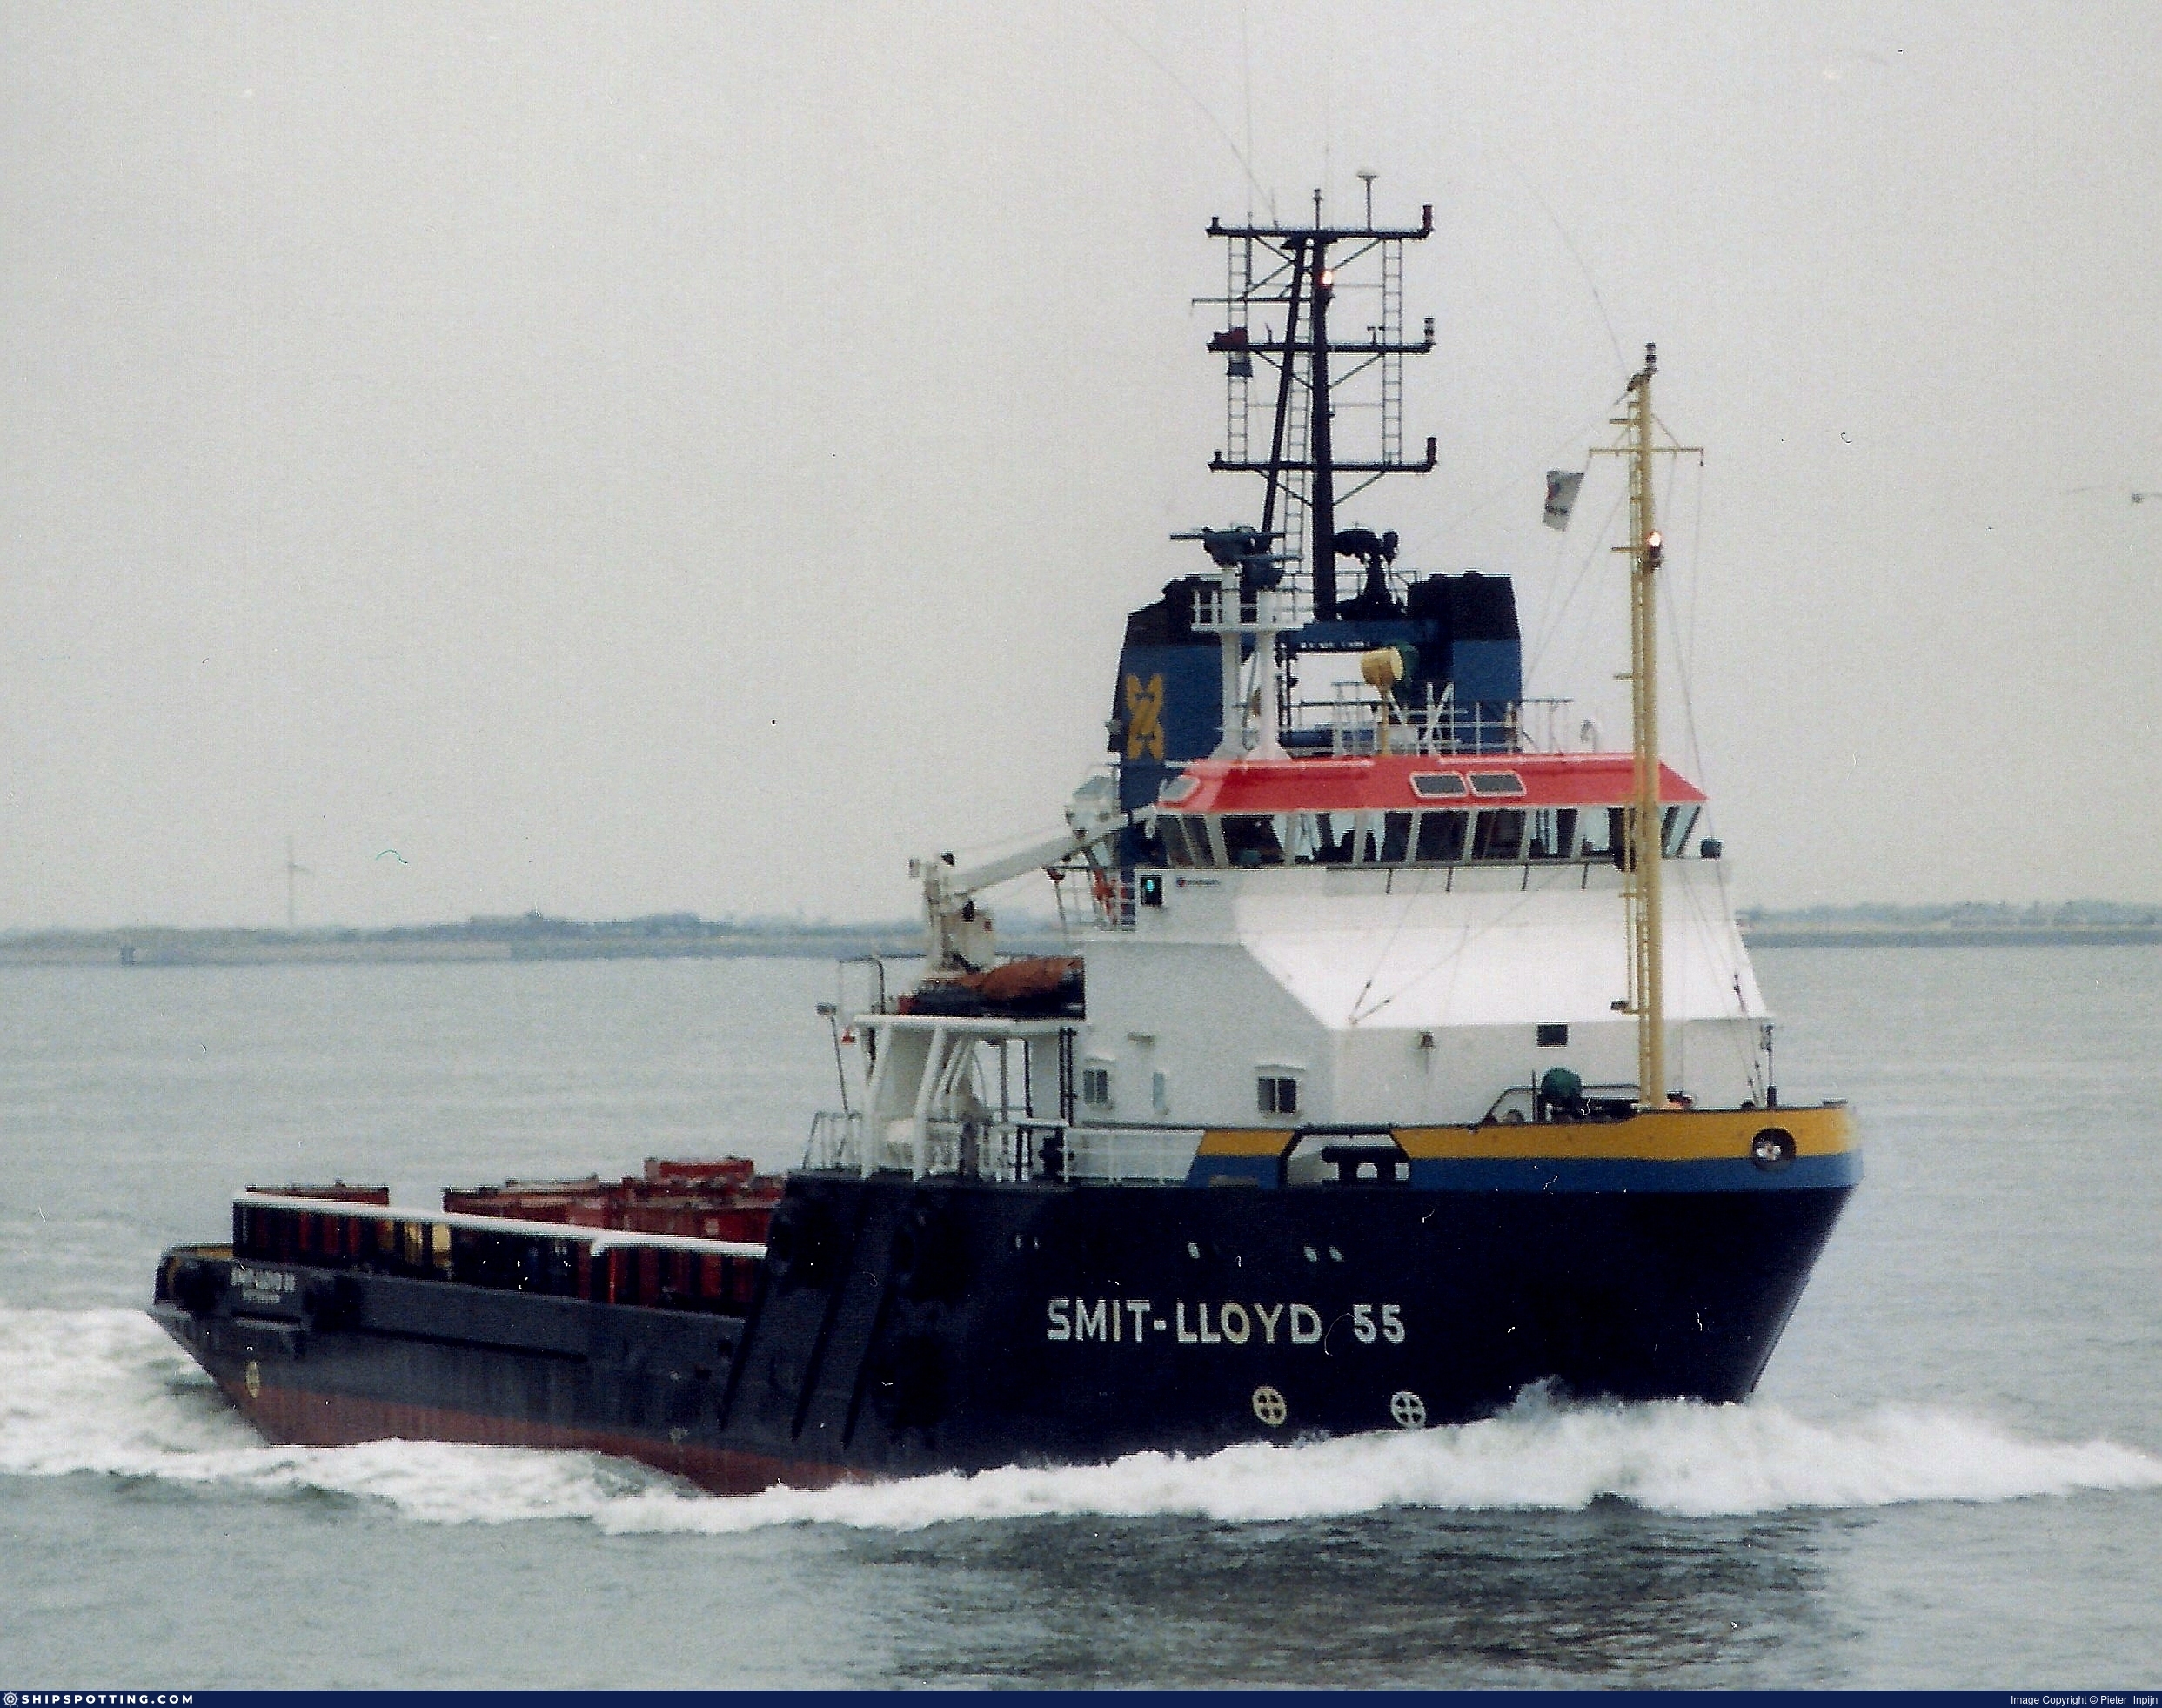 SMIT-LLOYD 55 - IMO 8517633 - ShipSpotting.com - Ship Photos, Information,  Videos and Ship Tracker